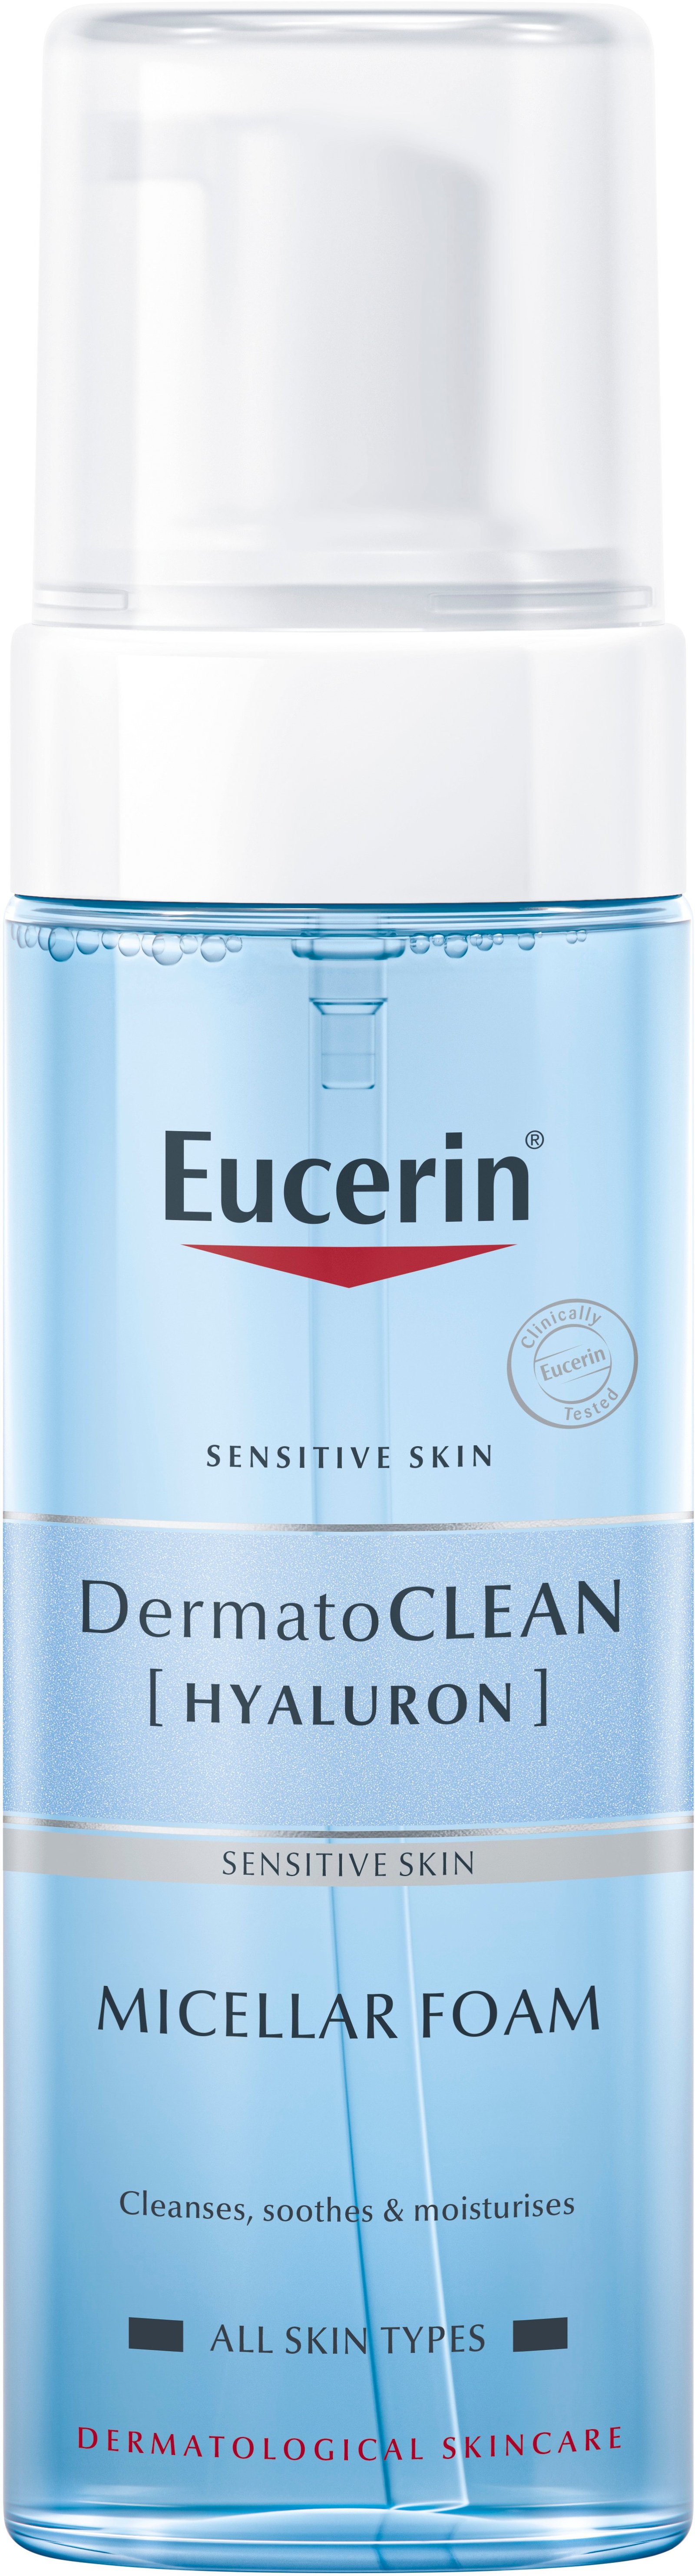 Eucerin DermatoCLEAN Micellar Foam 150 ml